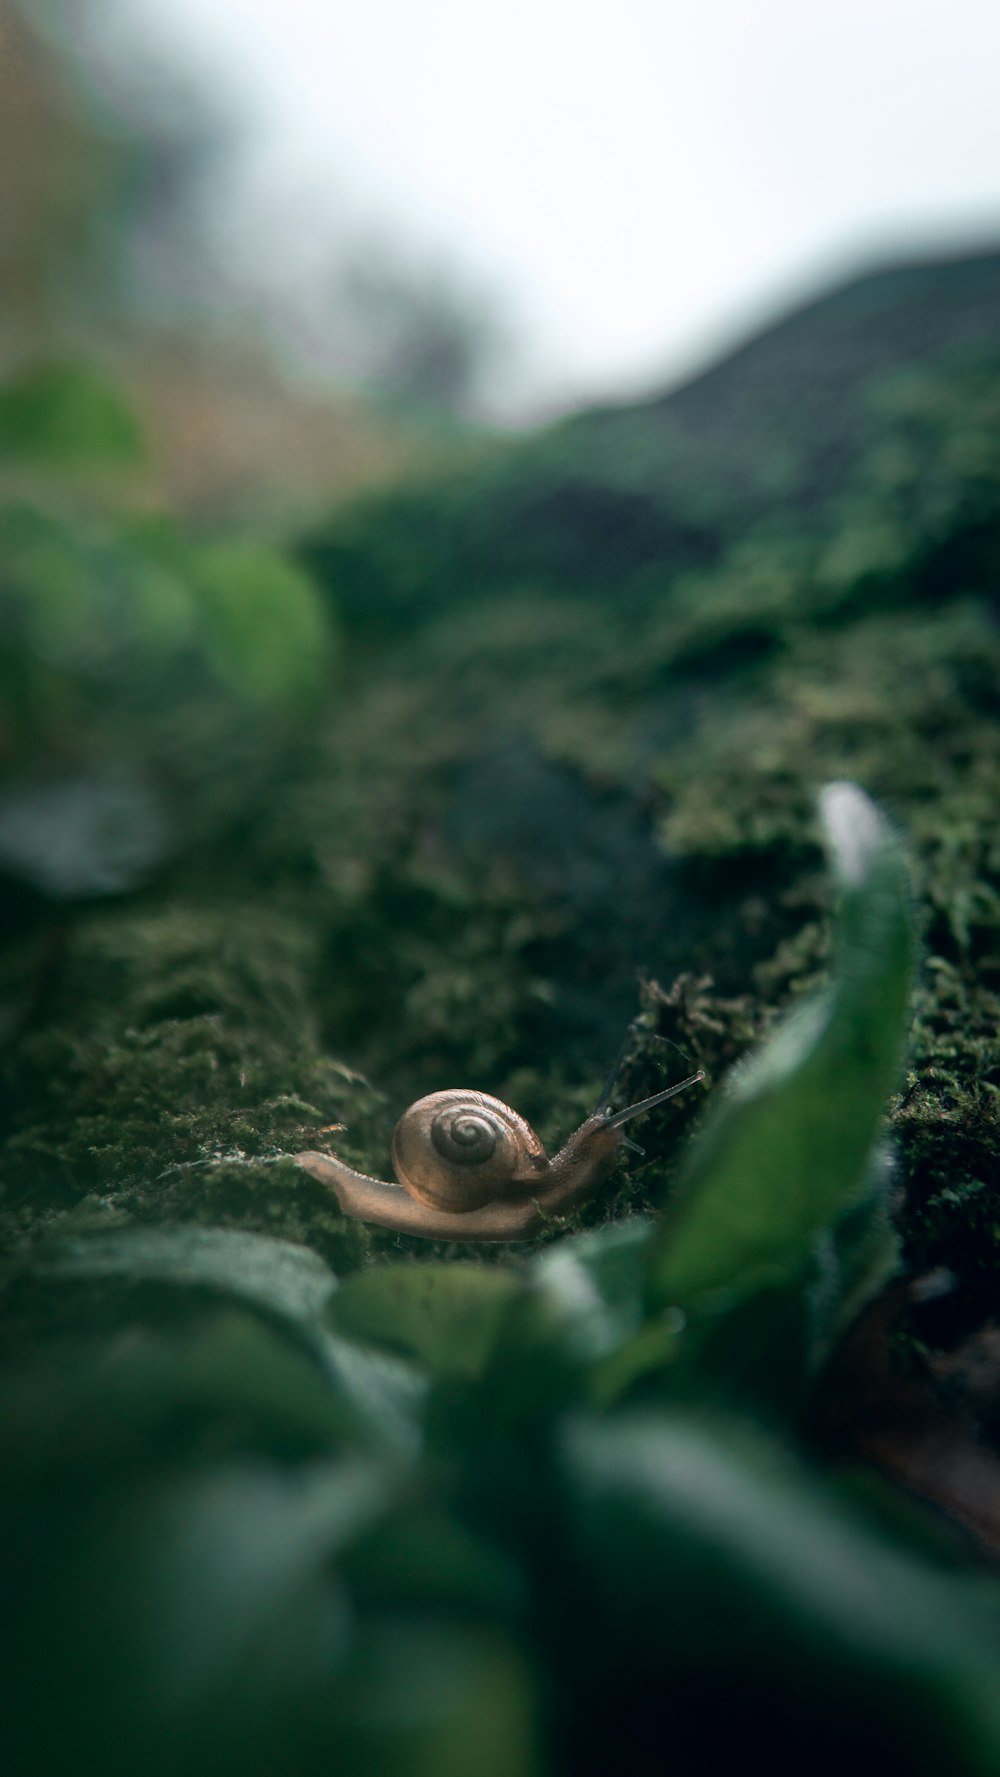 brown snail on ground